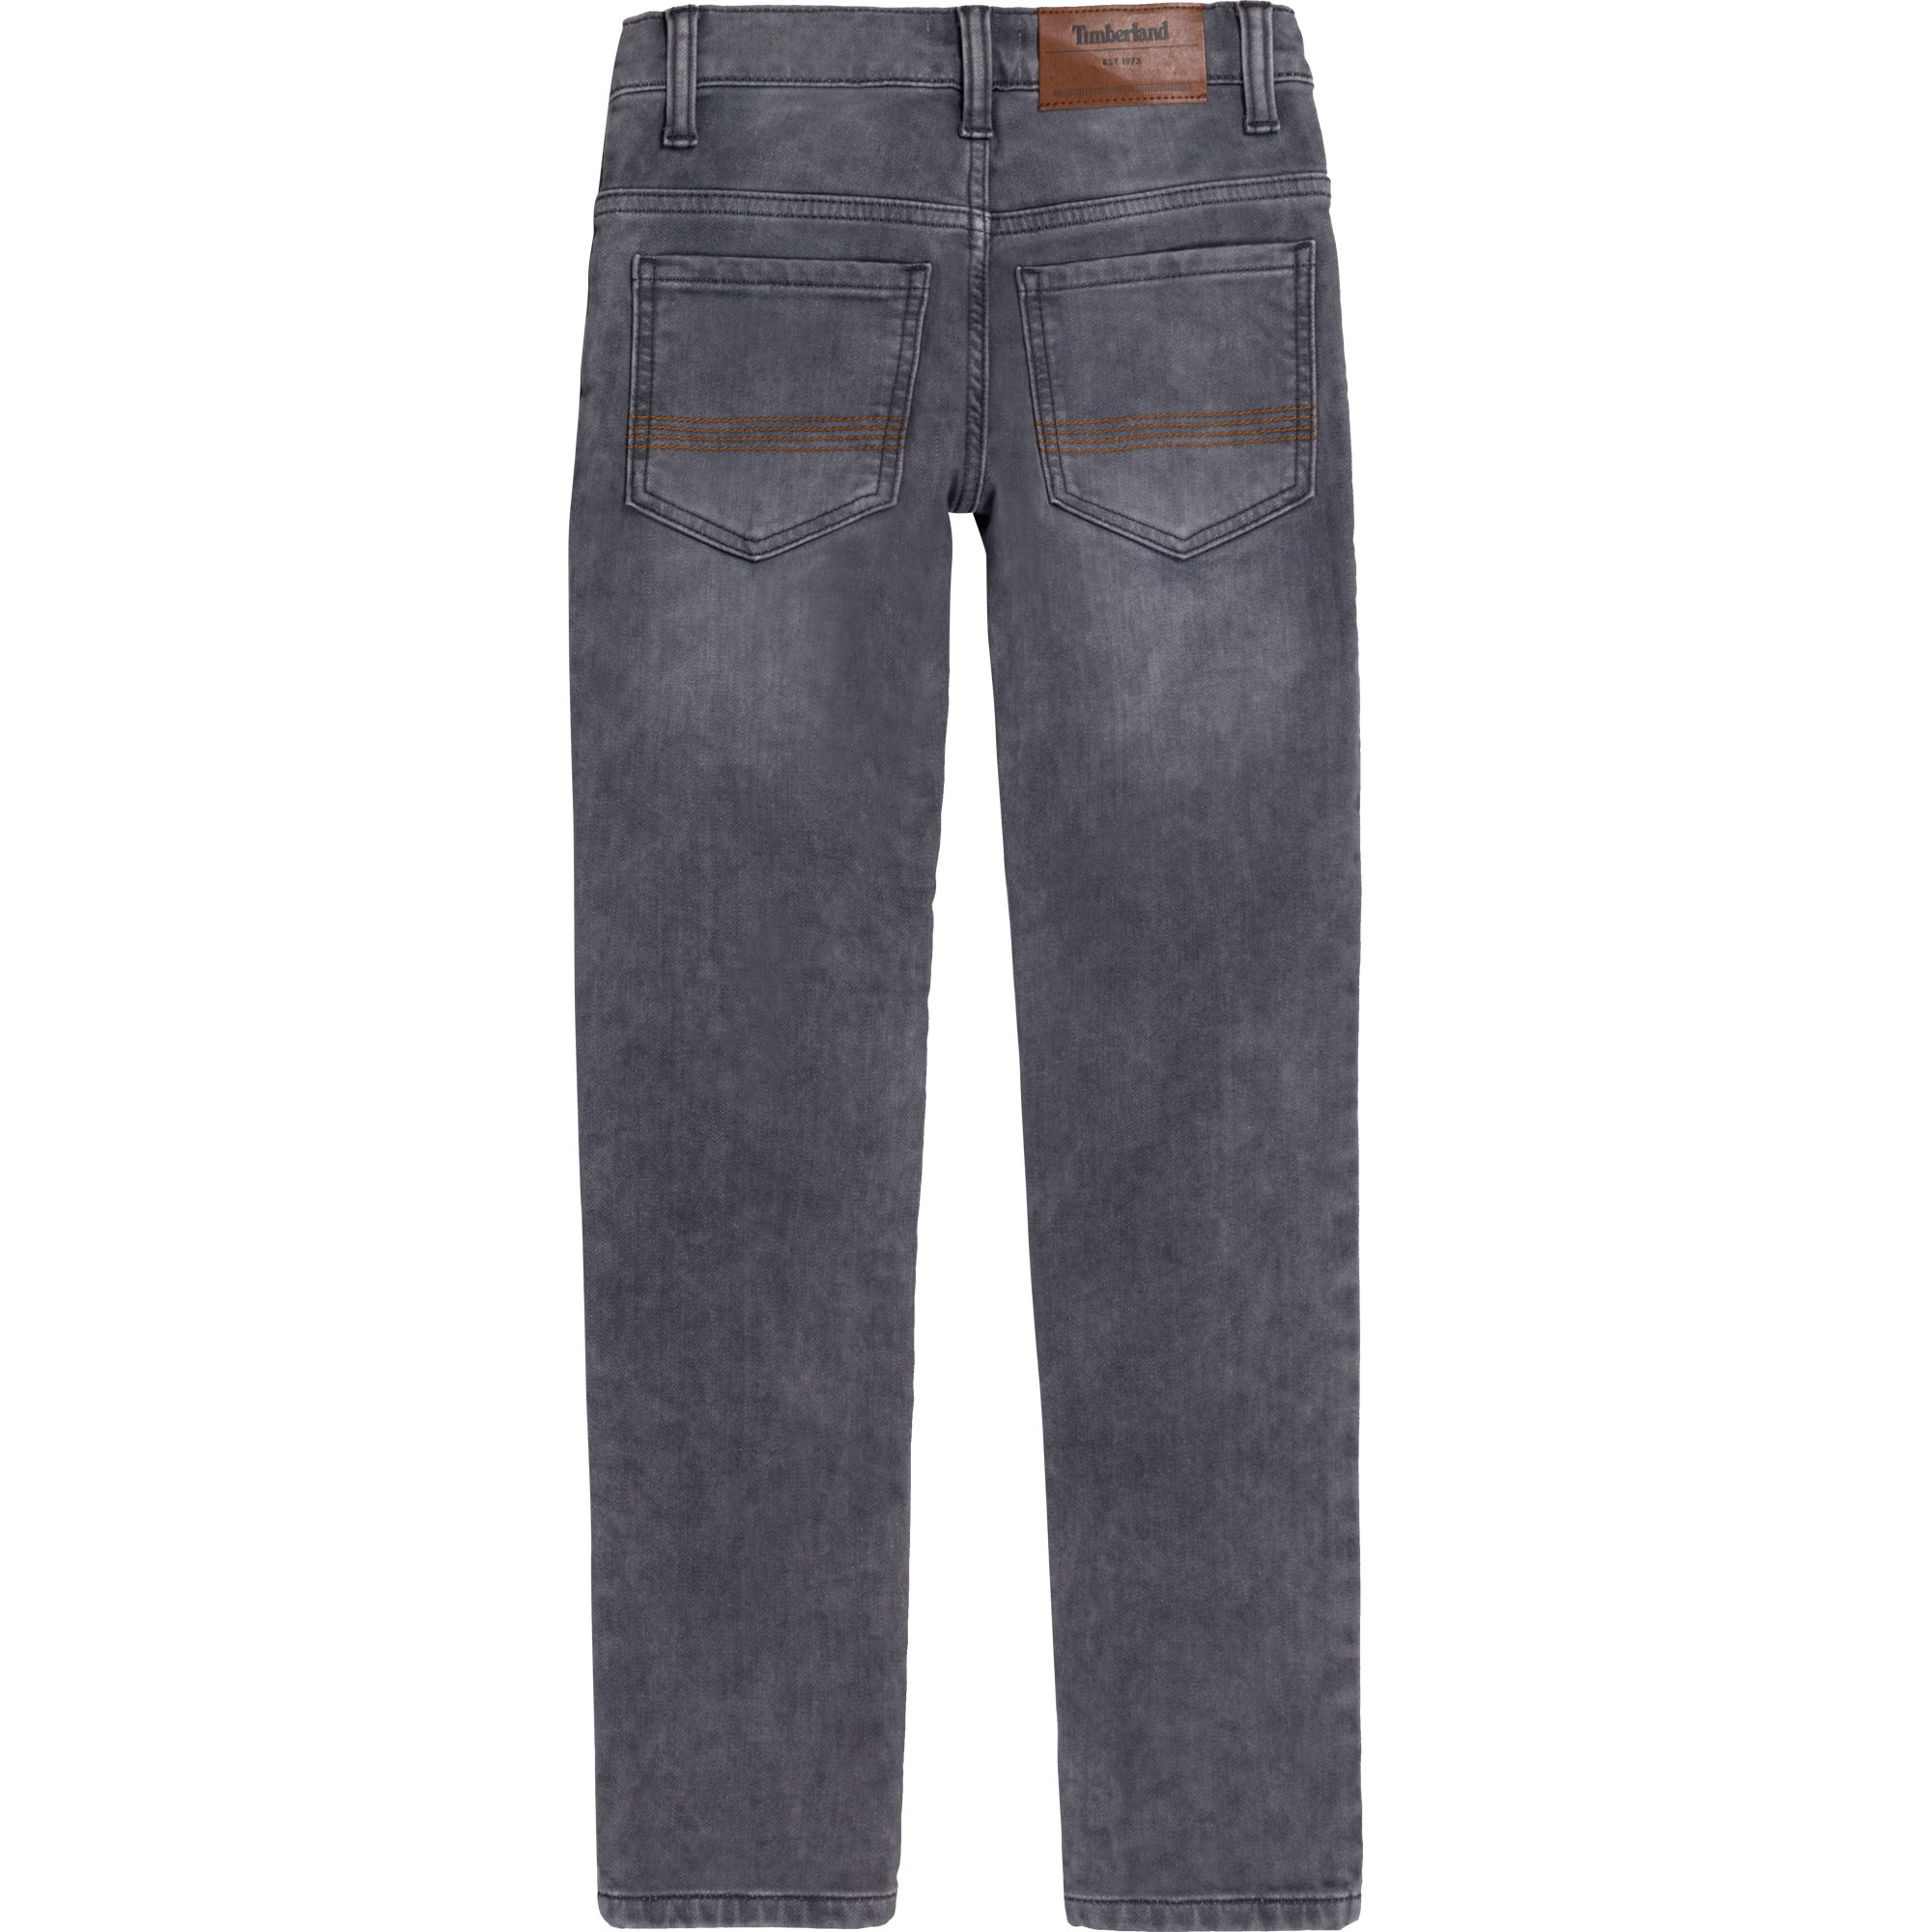 Jeans slim regolabili TIMBERLAND Per RAGAZZO